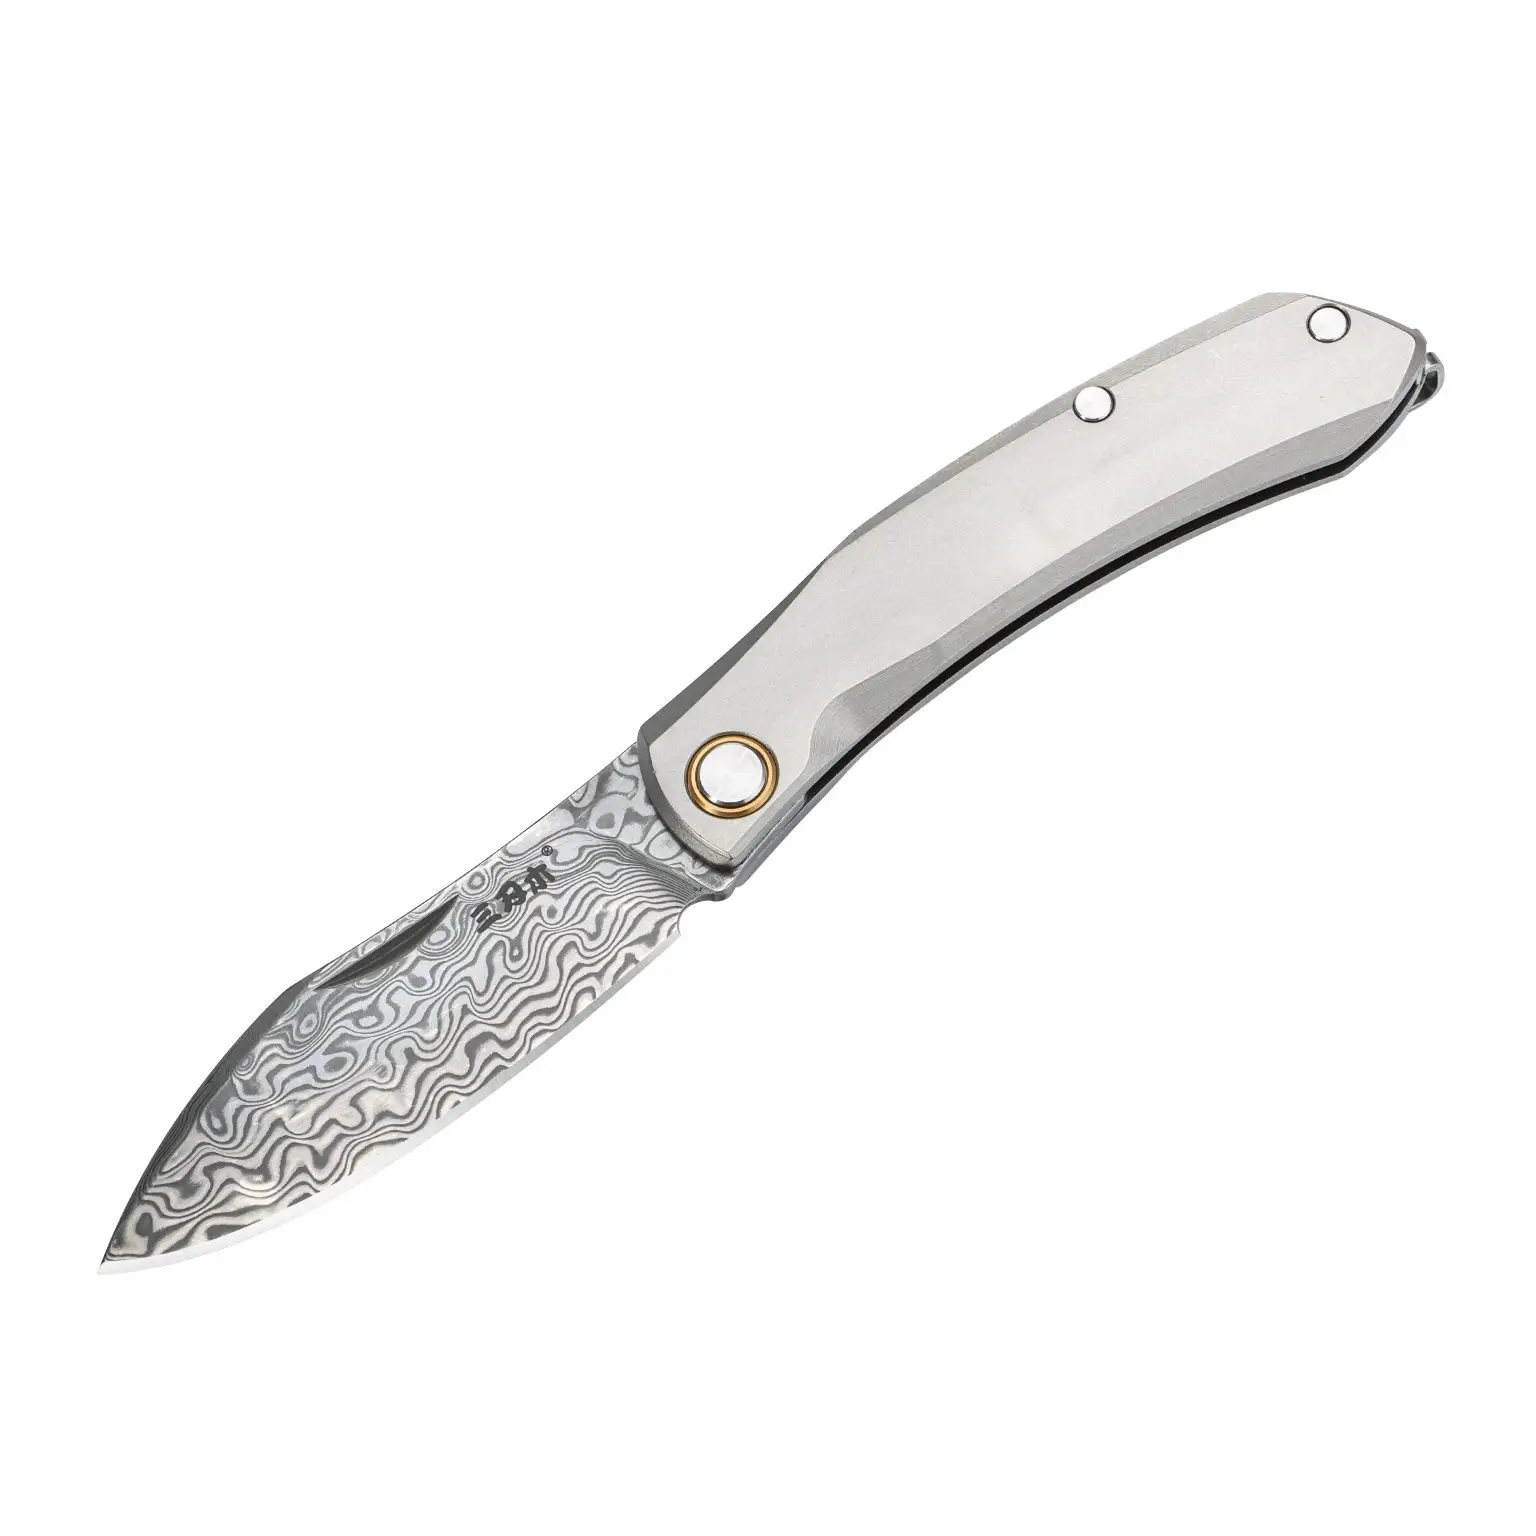 Hot selling Sanrenmu 7315-TZ Pocket Knife Damascus Steel Custom Outdoor Hunting EDC Camping Survival Folding Knife